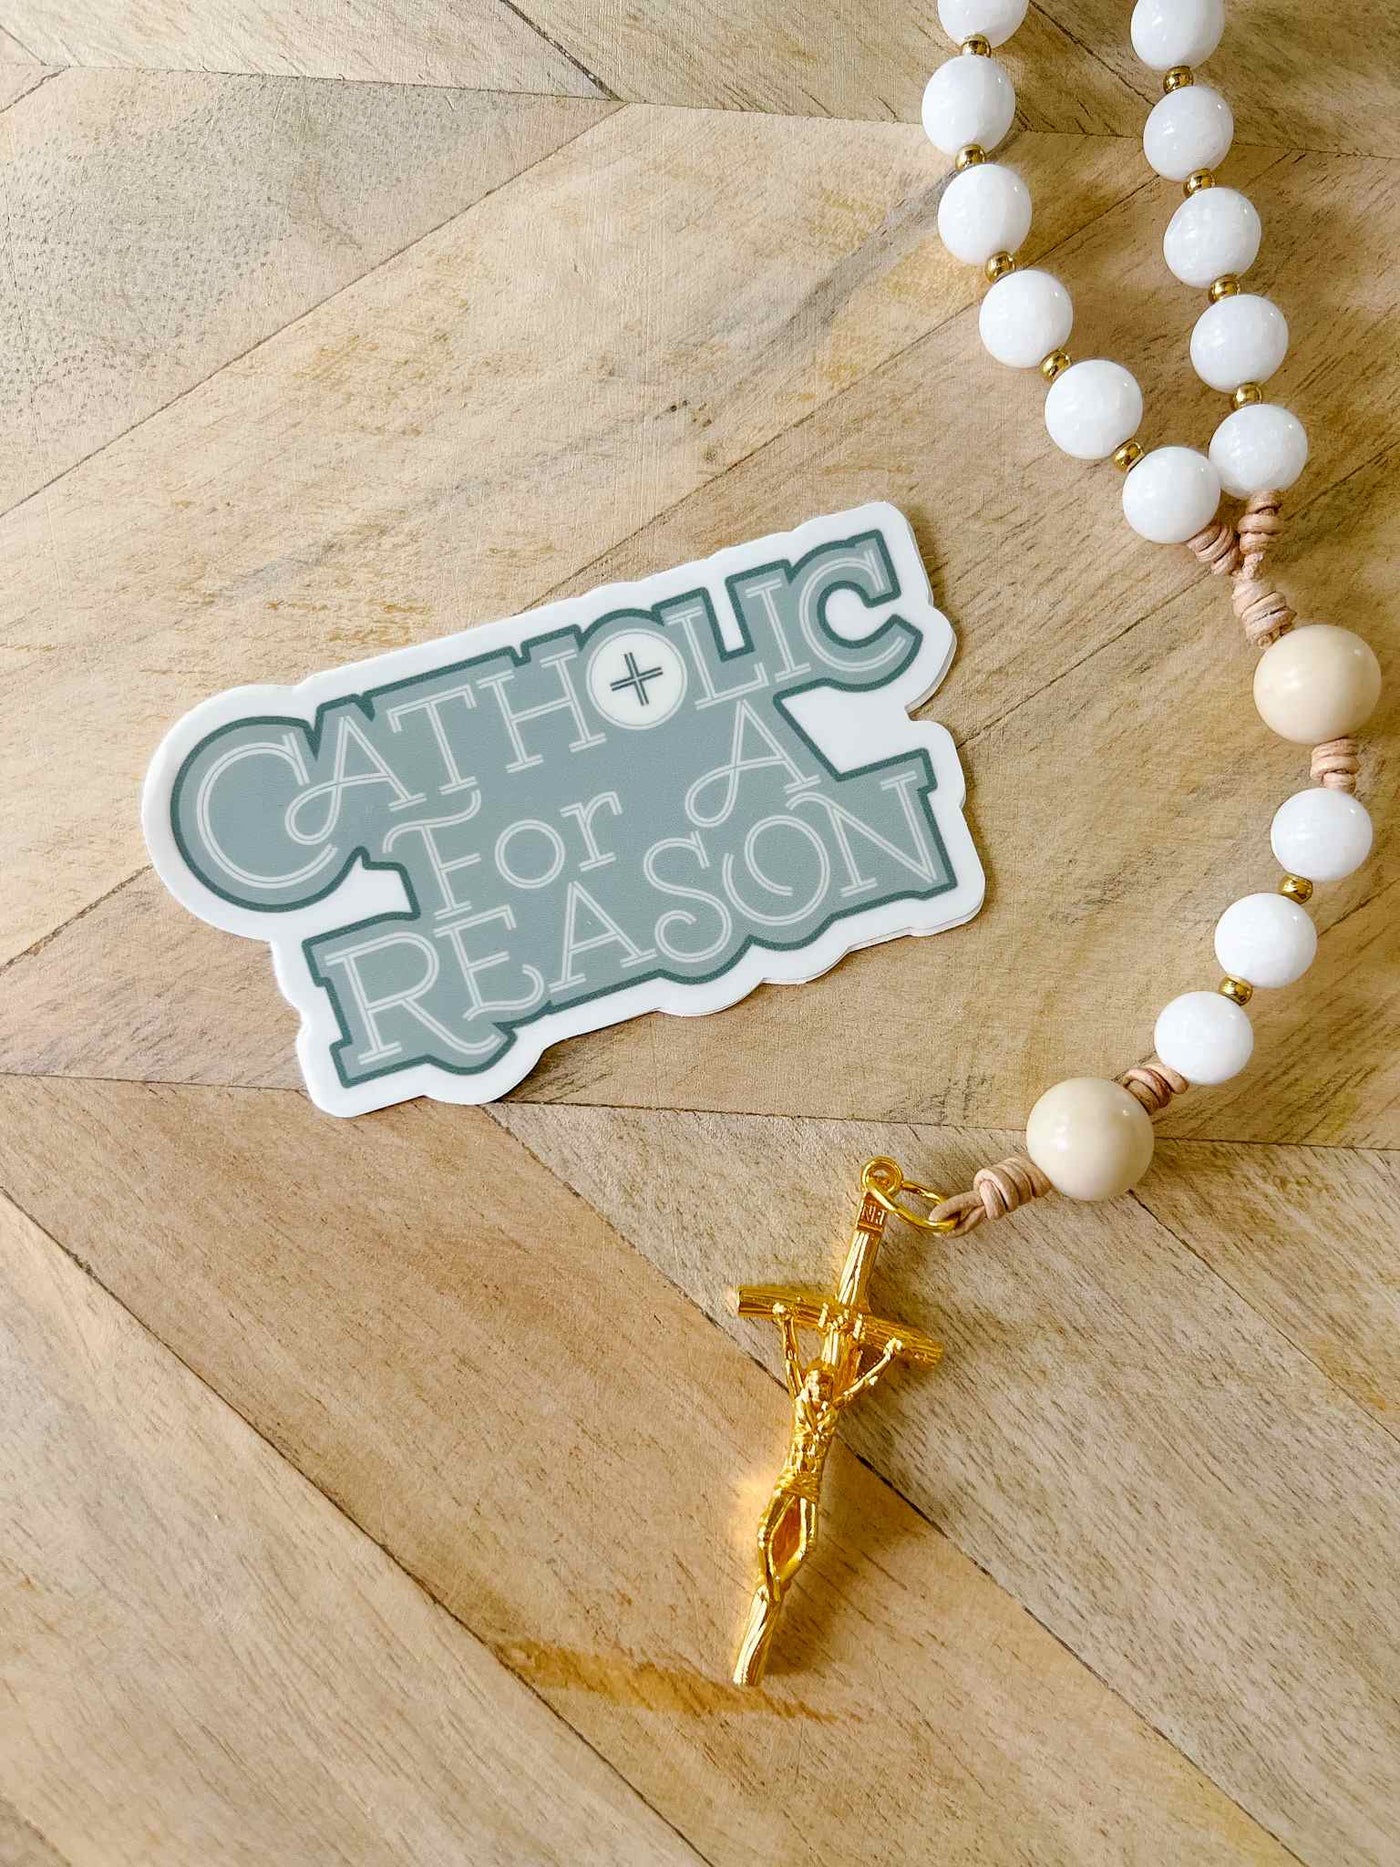 Catholic For A Reason - Sticker